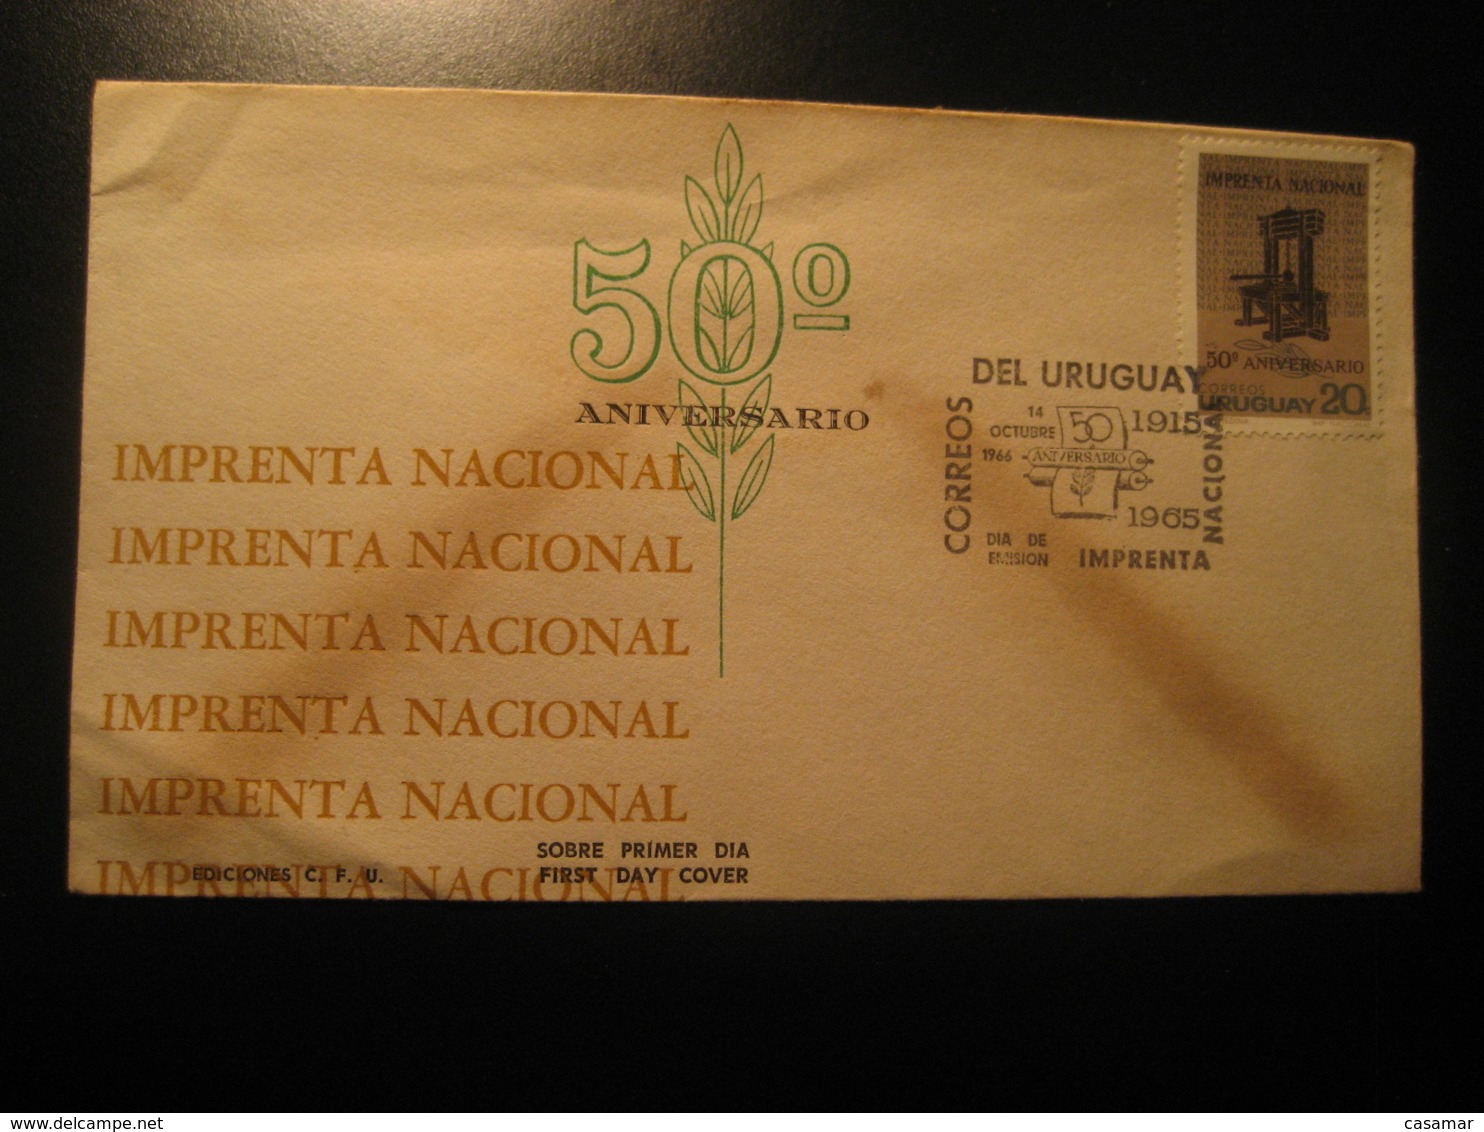 1965 Imprenta Nacional FDC Cancel Cover URUGUAY - Uruguay